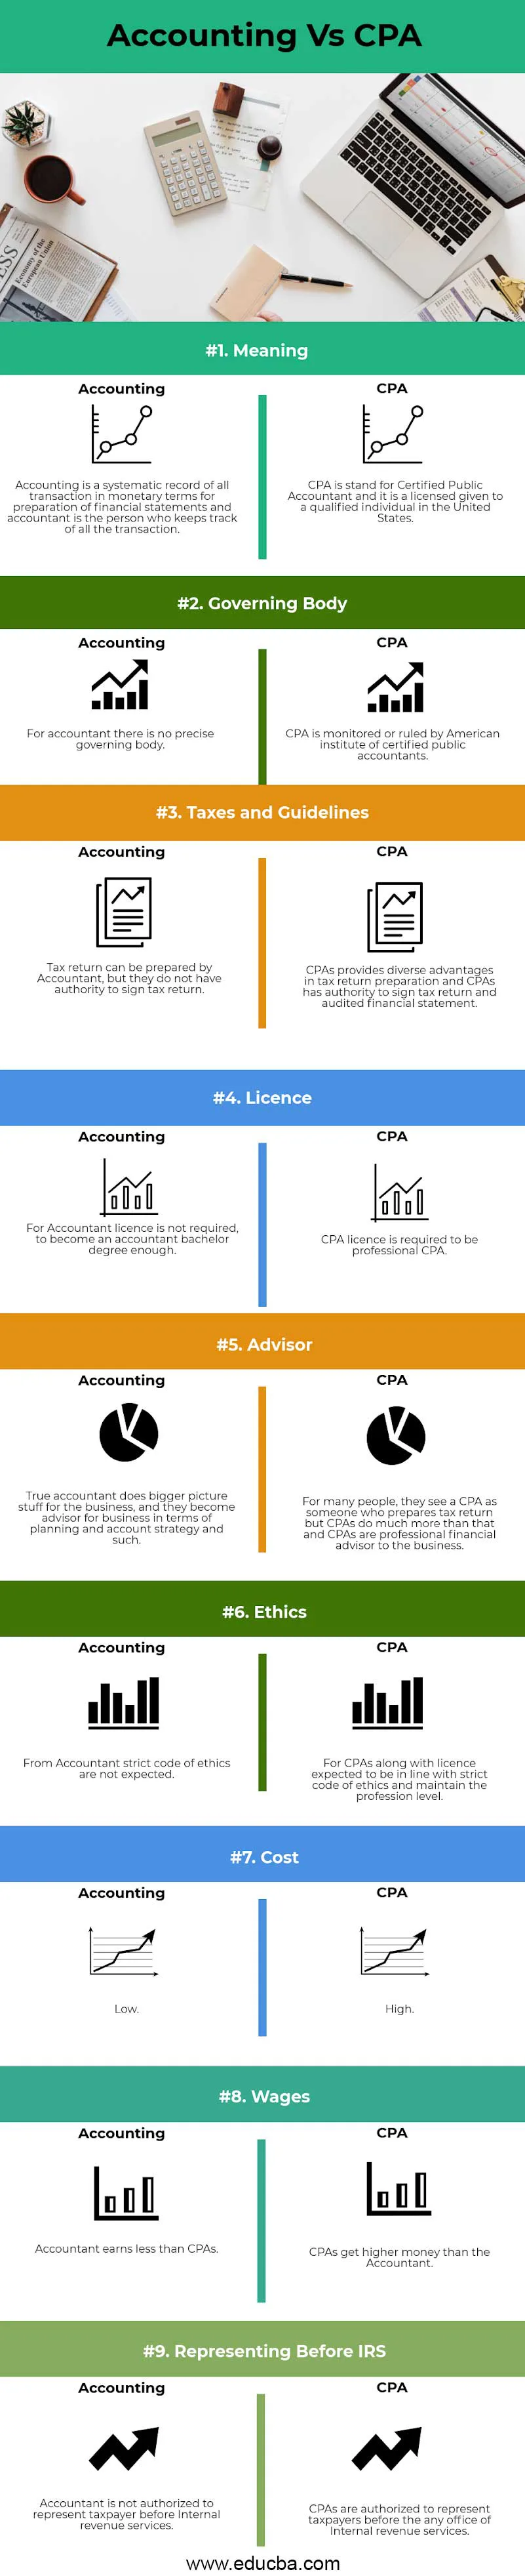 Accounting vs CPA info